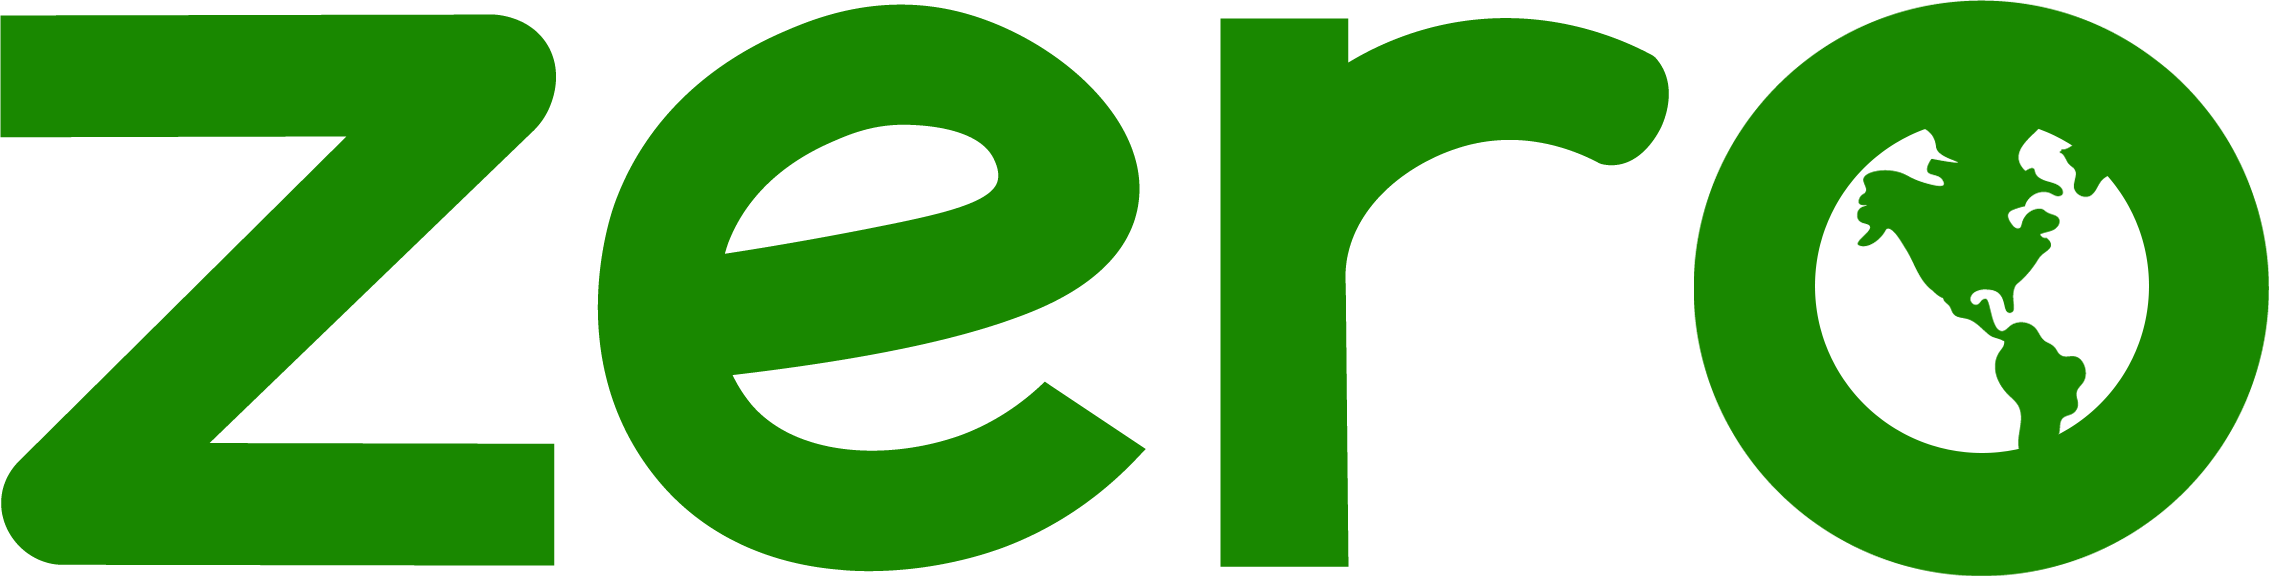 Zero Waste Globe Logo